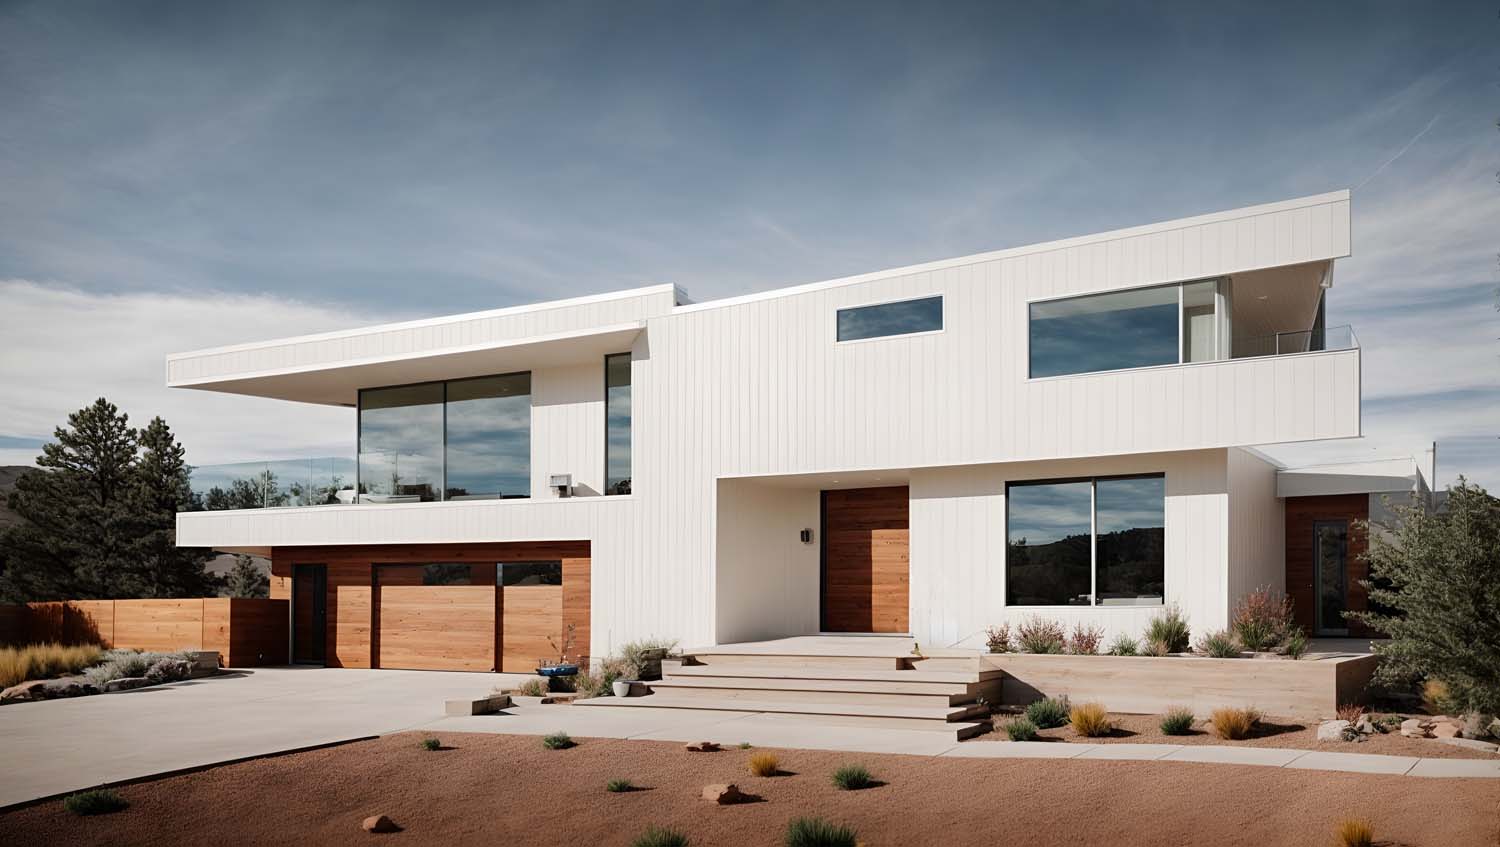 Siding Colorado: Neighborhood House in Colorado Springs with Vertical Plank Siding